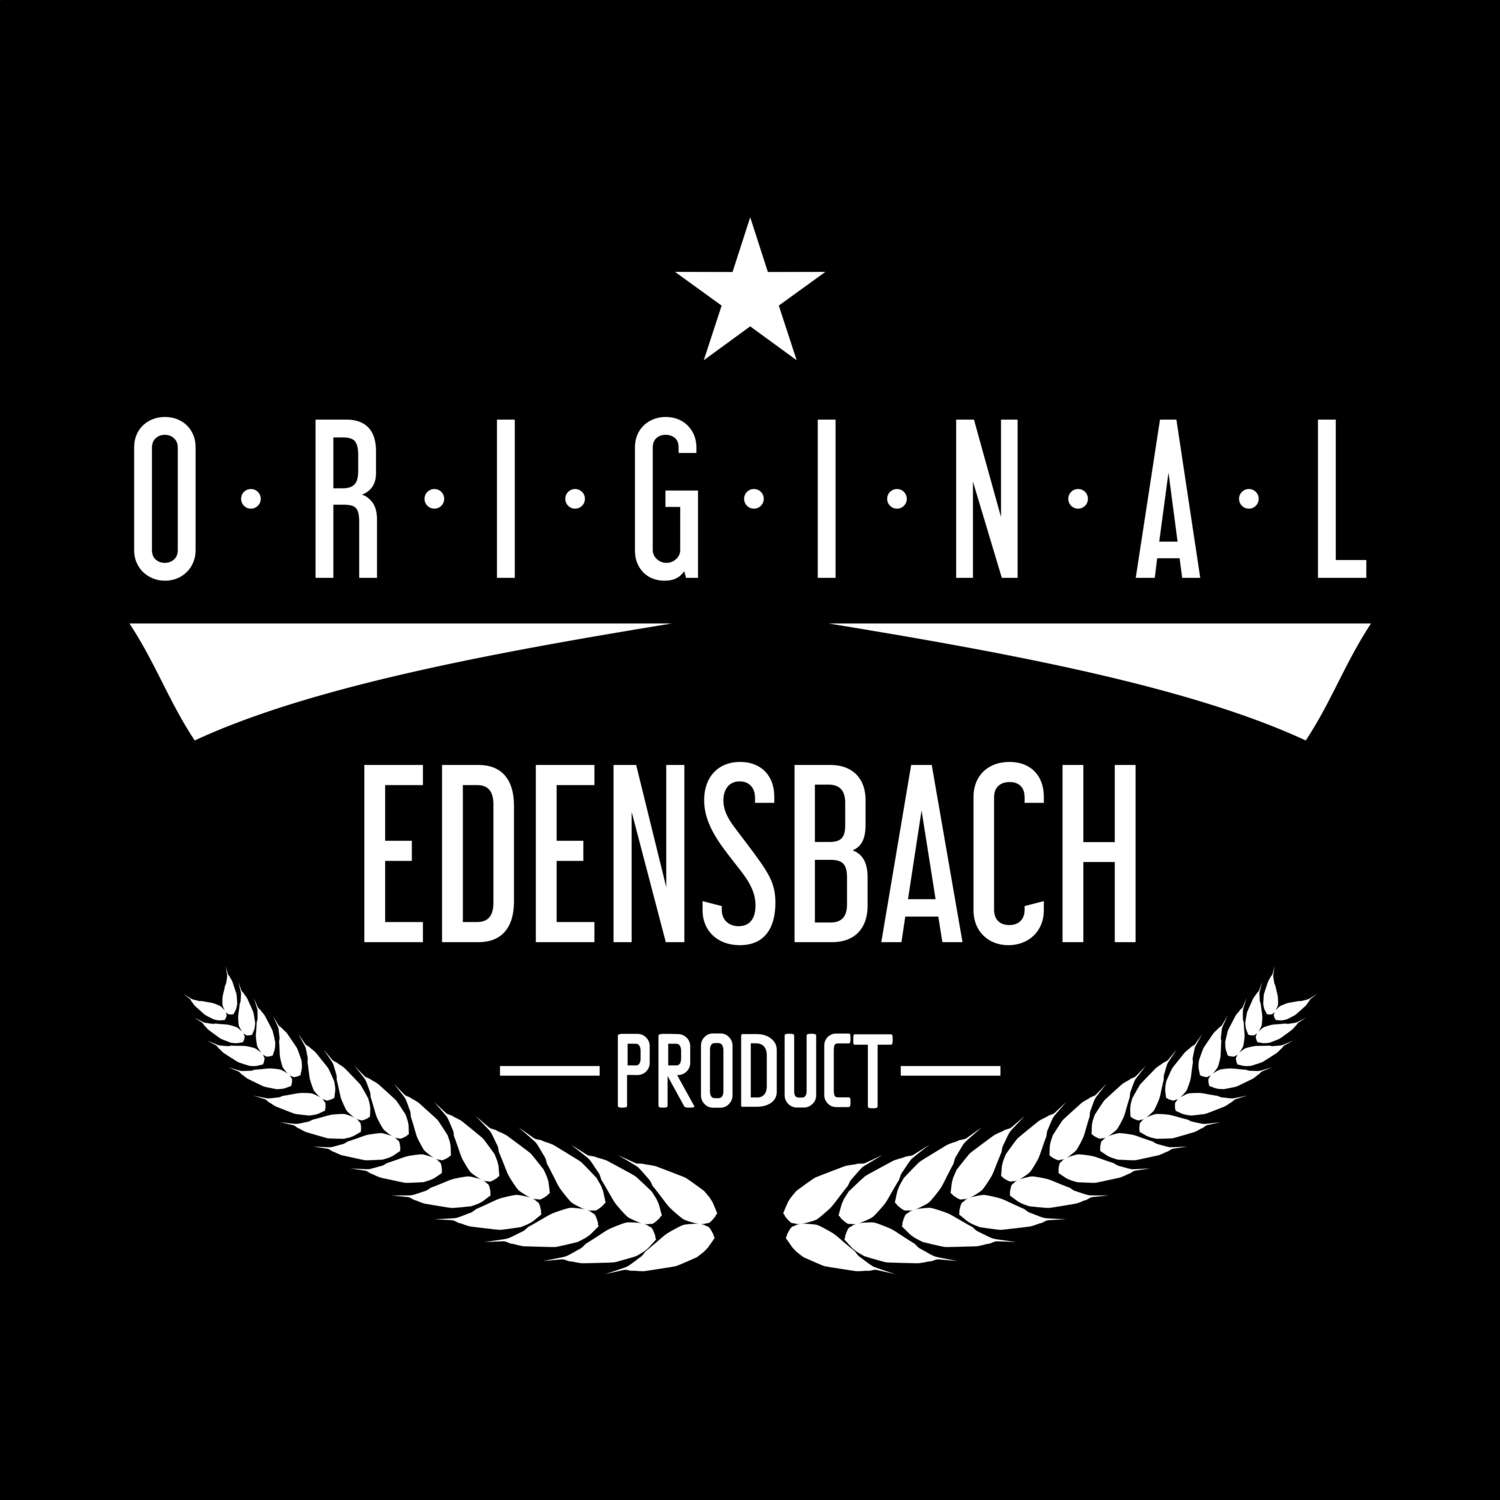 Edensbach T-Shirt »Original Product«